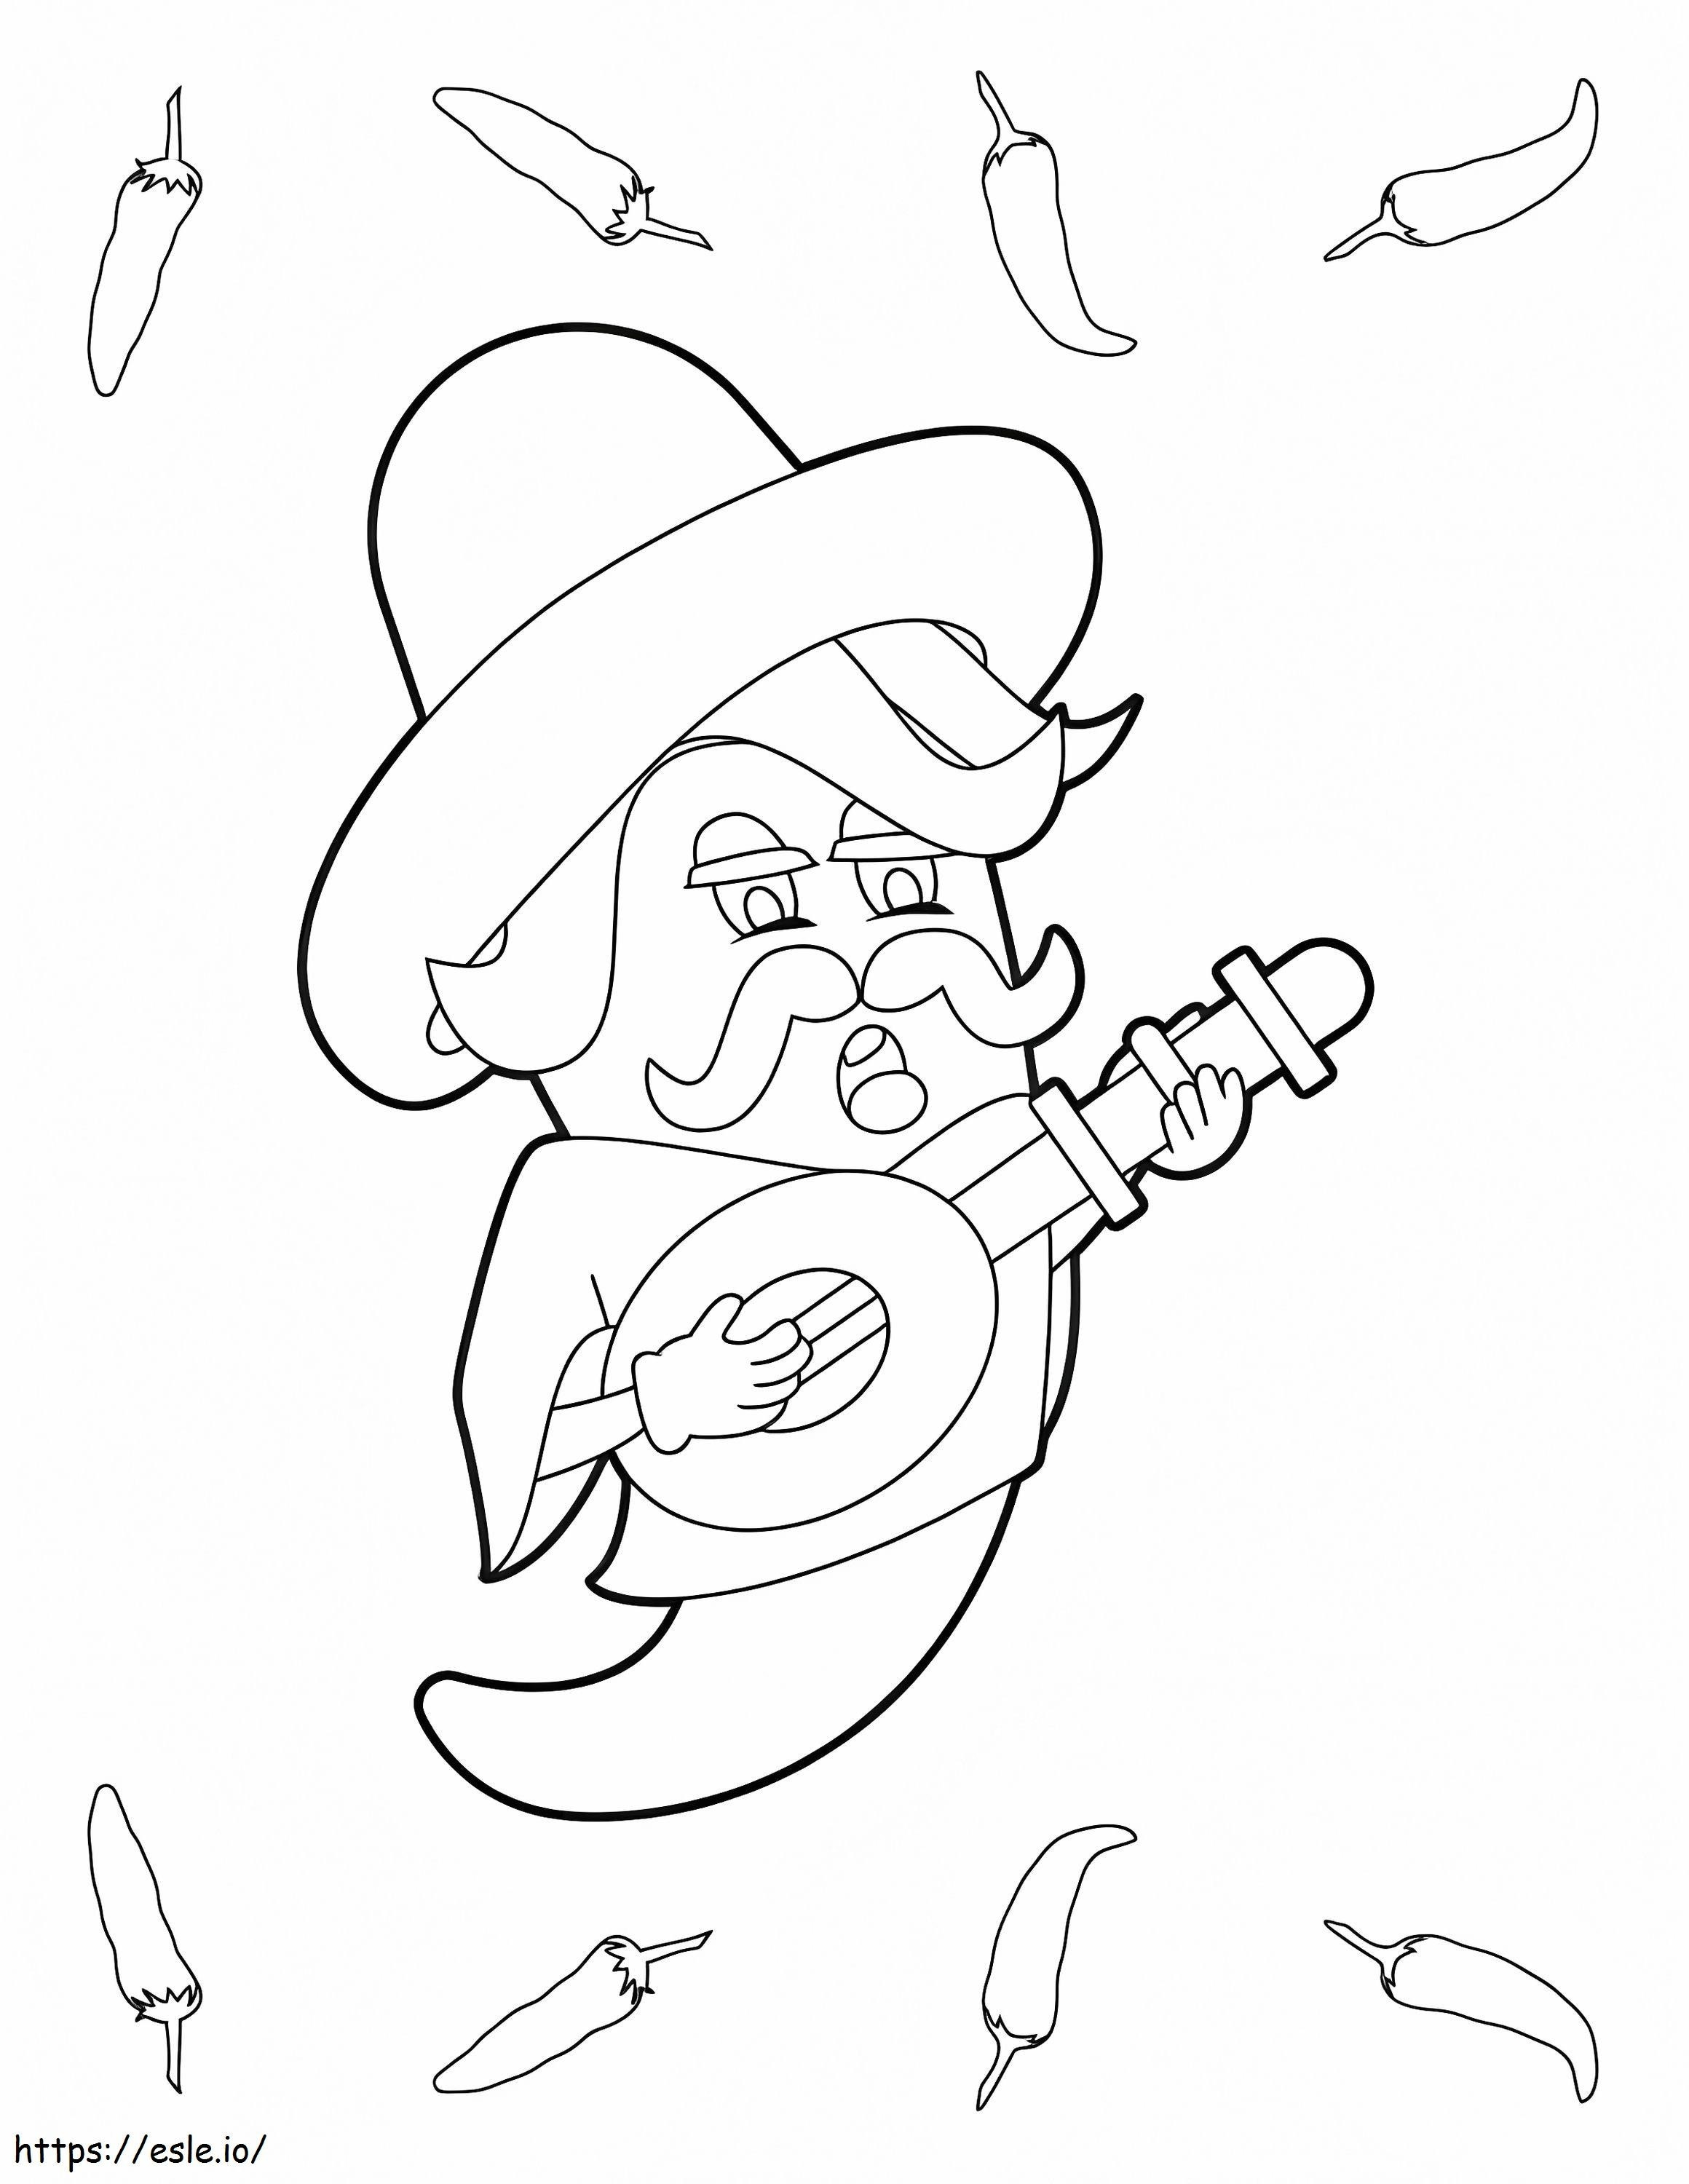 Old Chili tocando guitarra para colorir